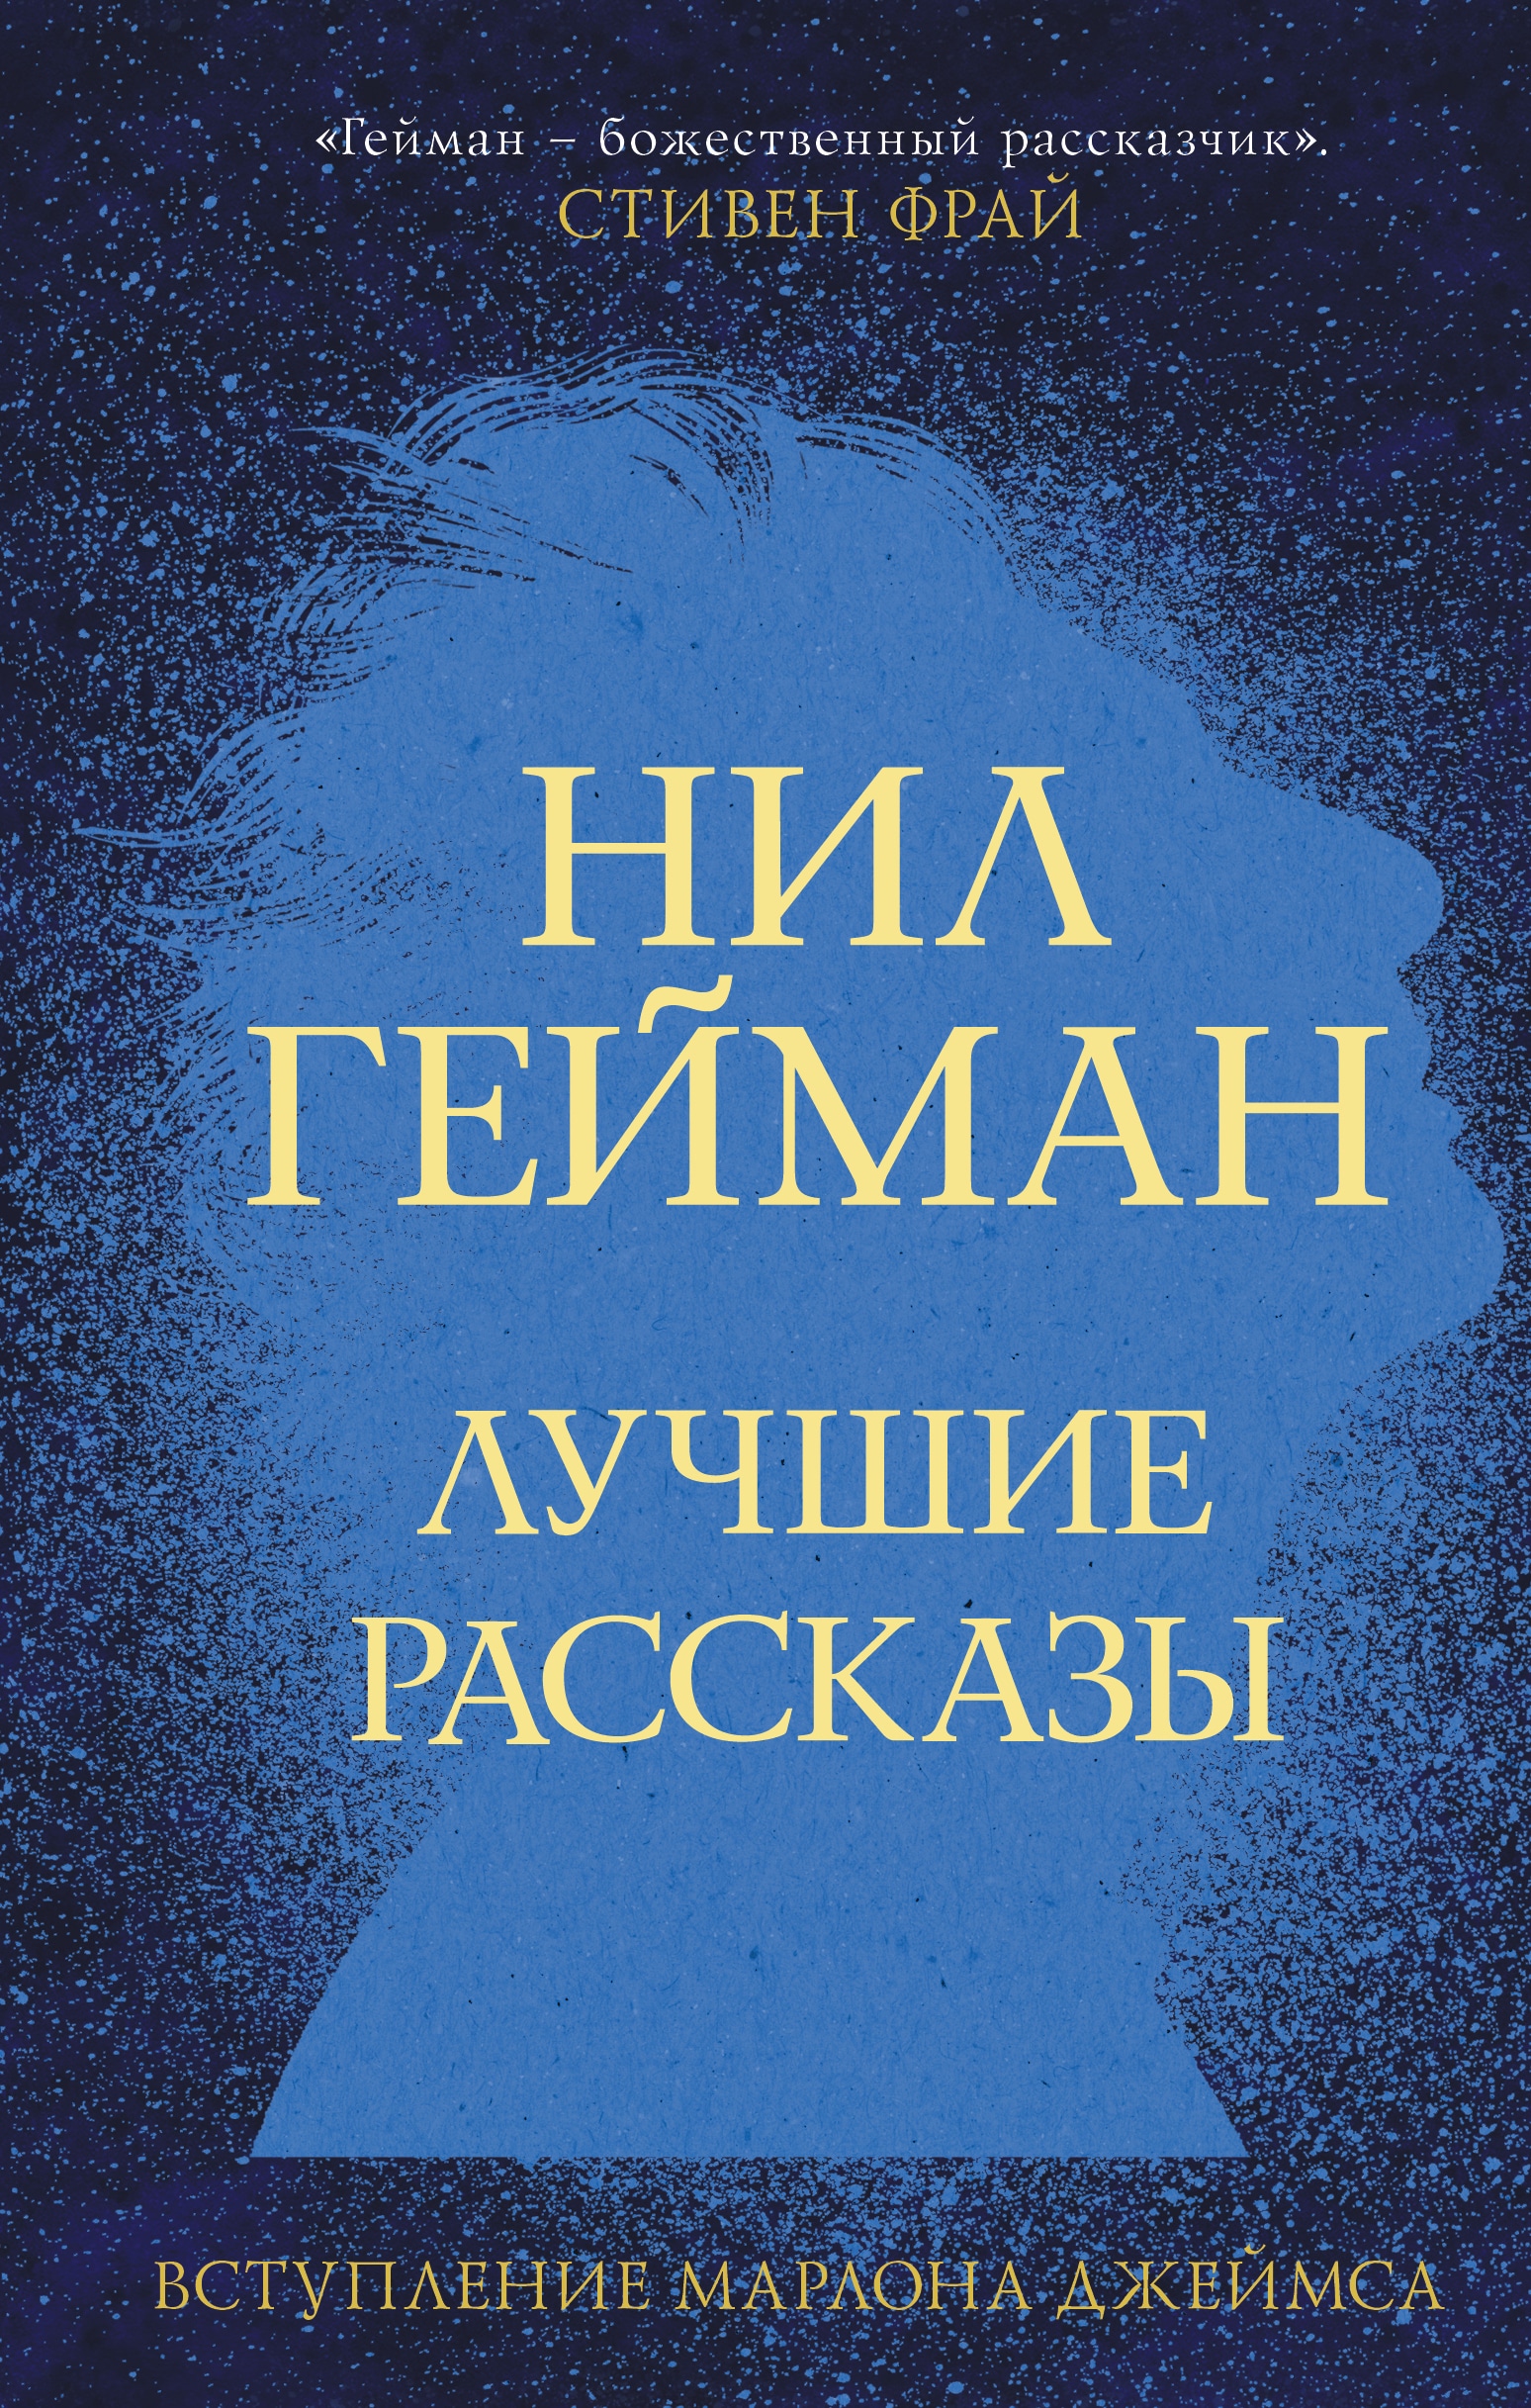 Book “Лучшие рассказы” by Нил Гейман — November 26, 2021